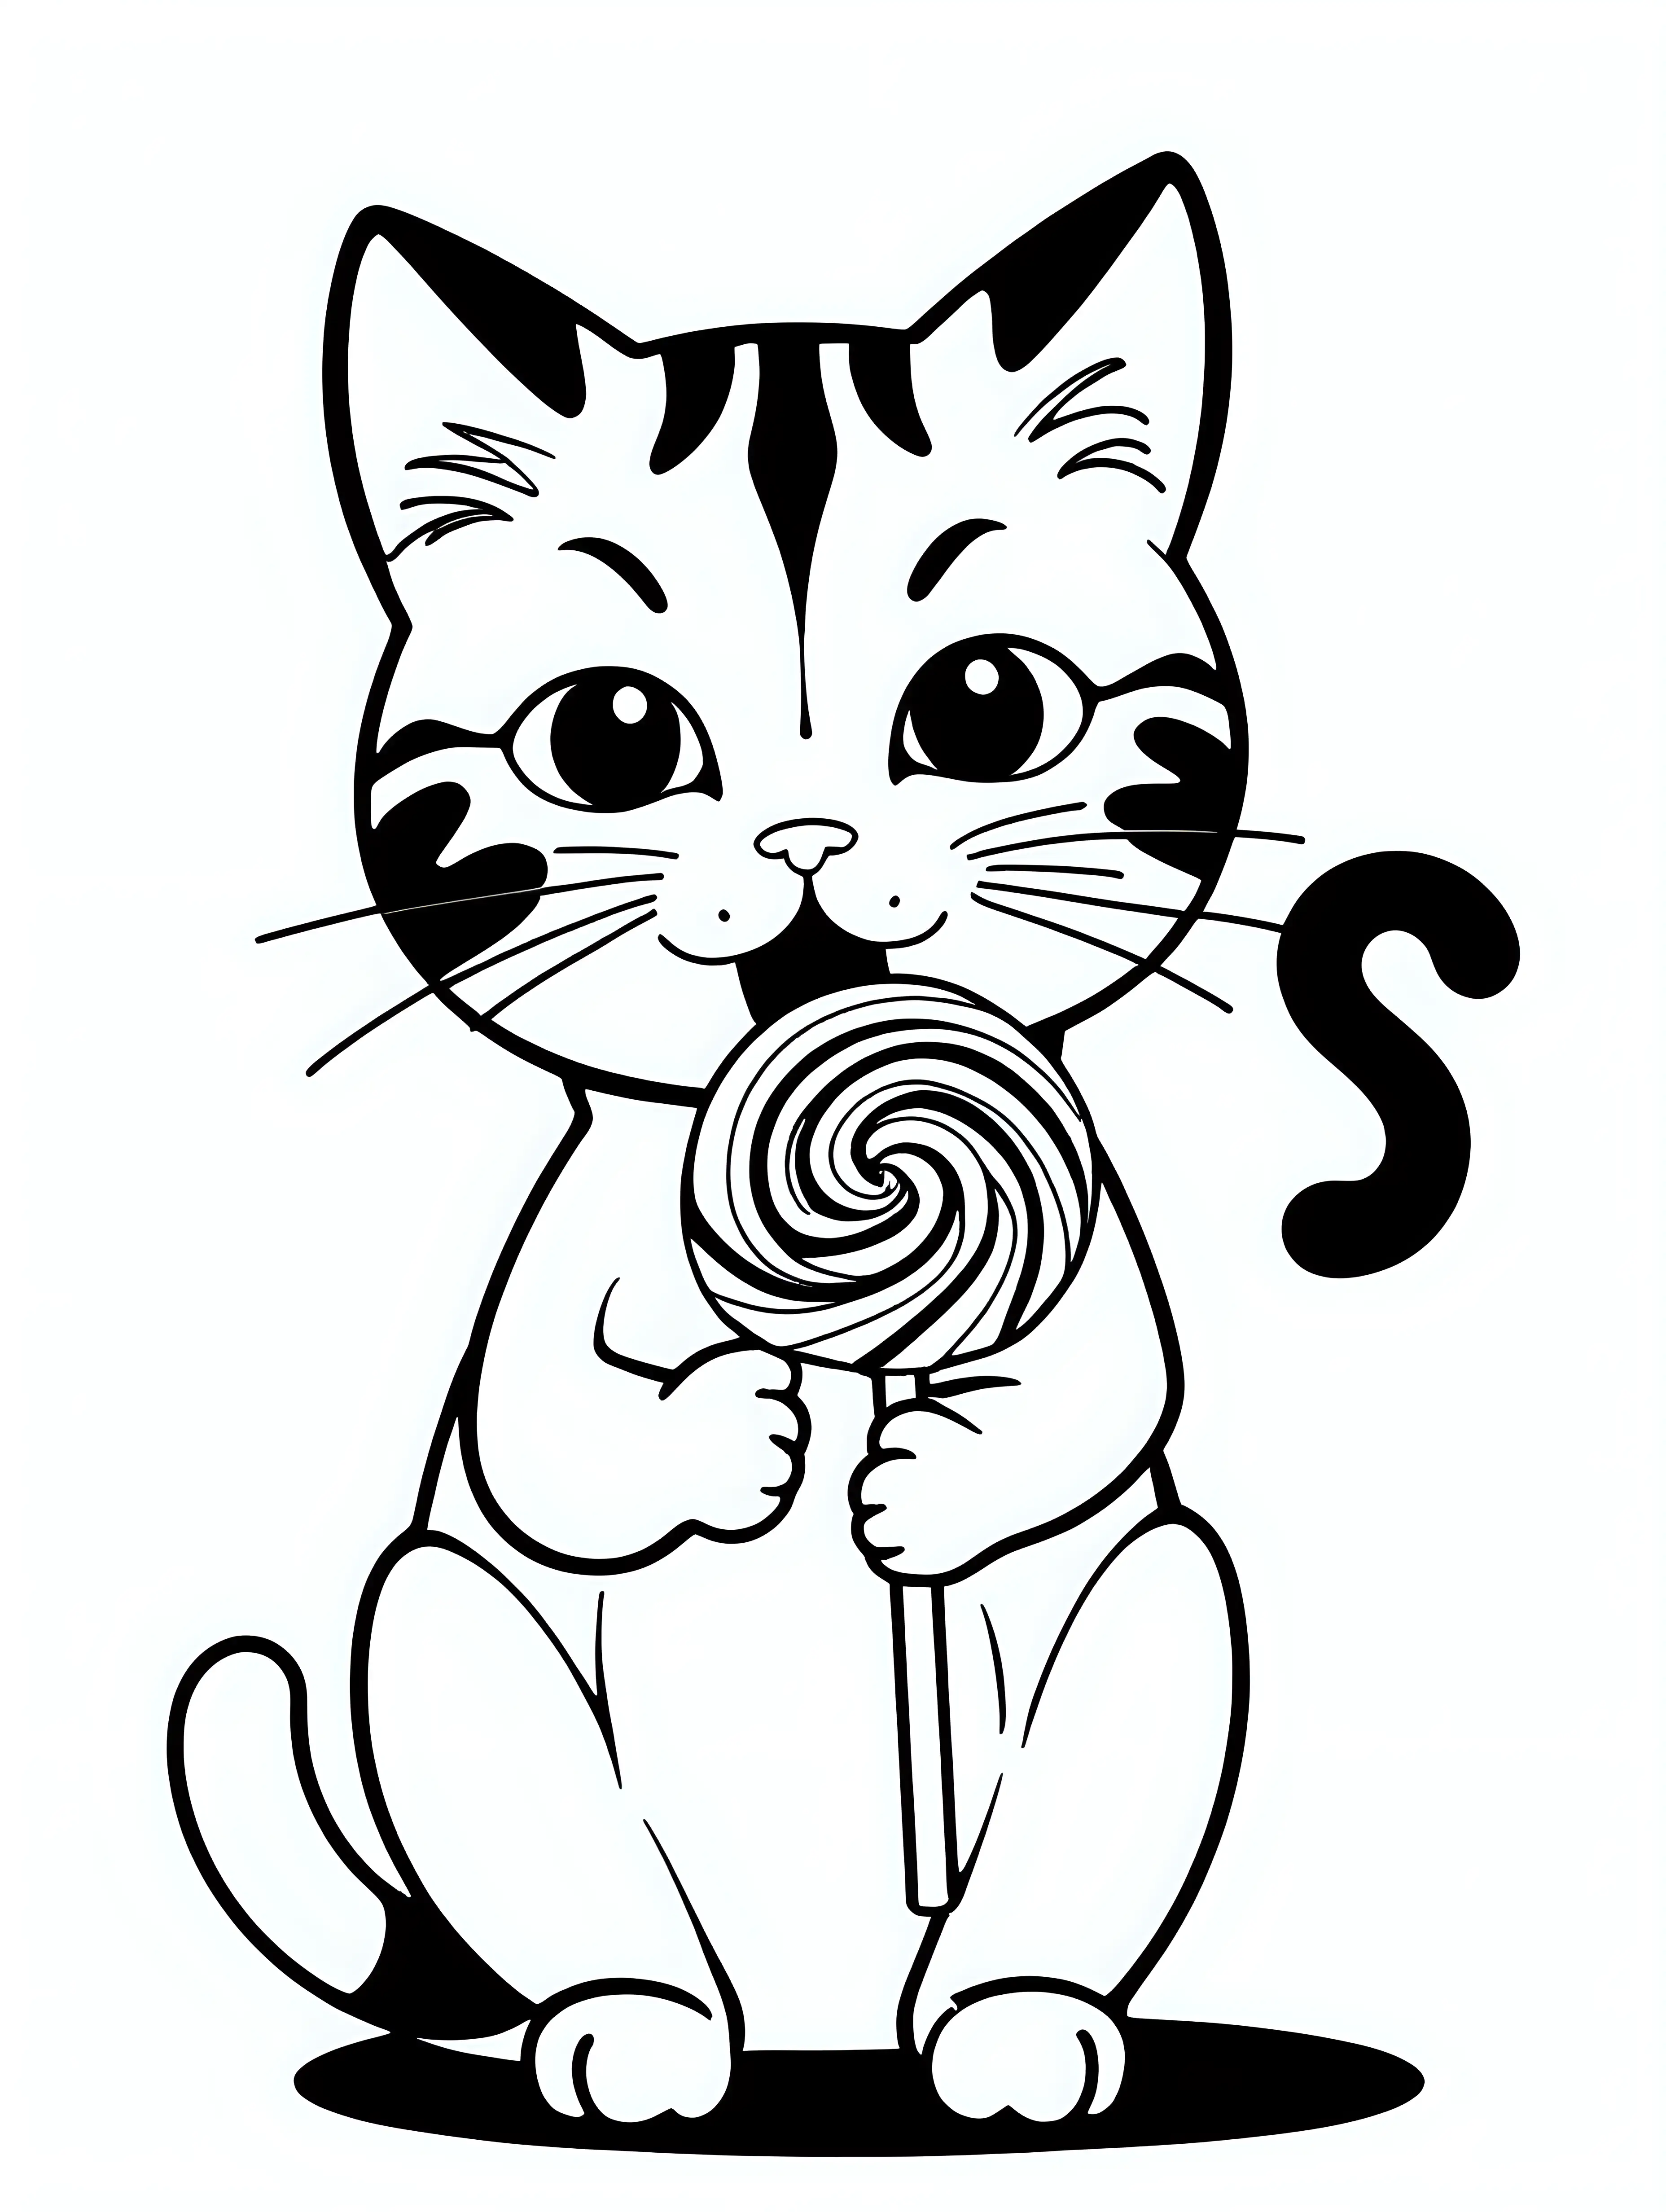 Adorable Monochrome Kawaii Cat Enjoying Candy Lollipop